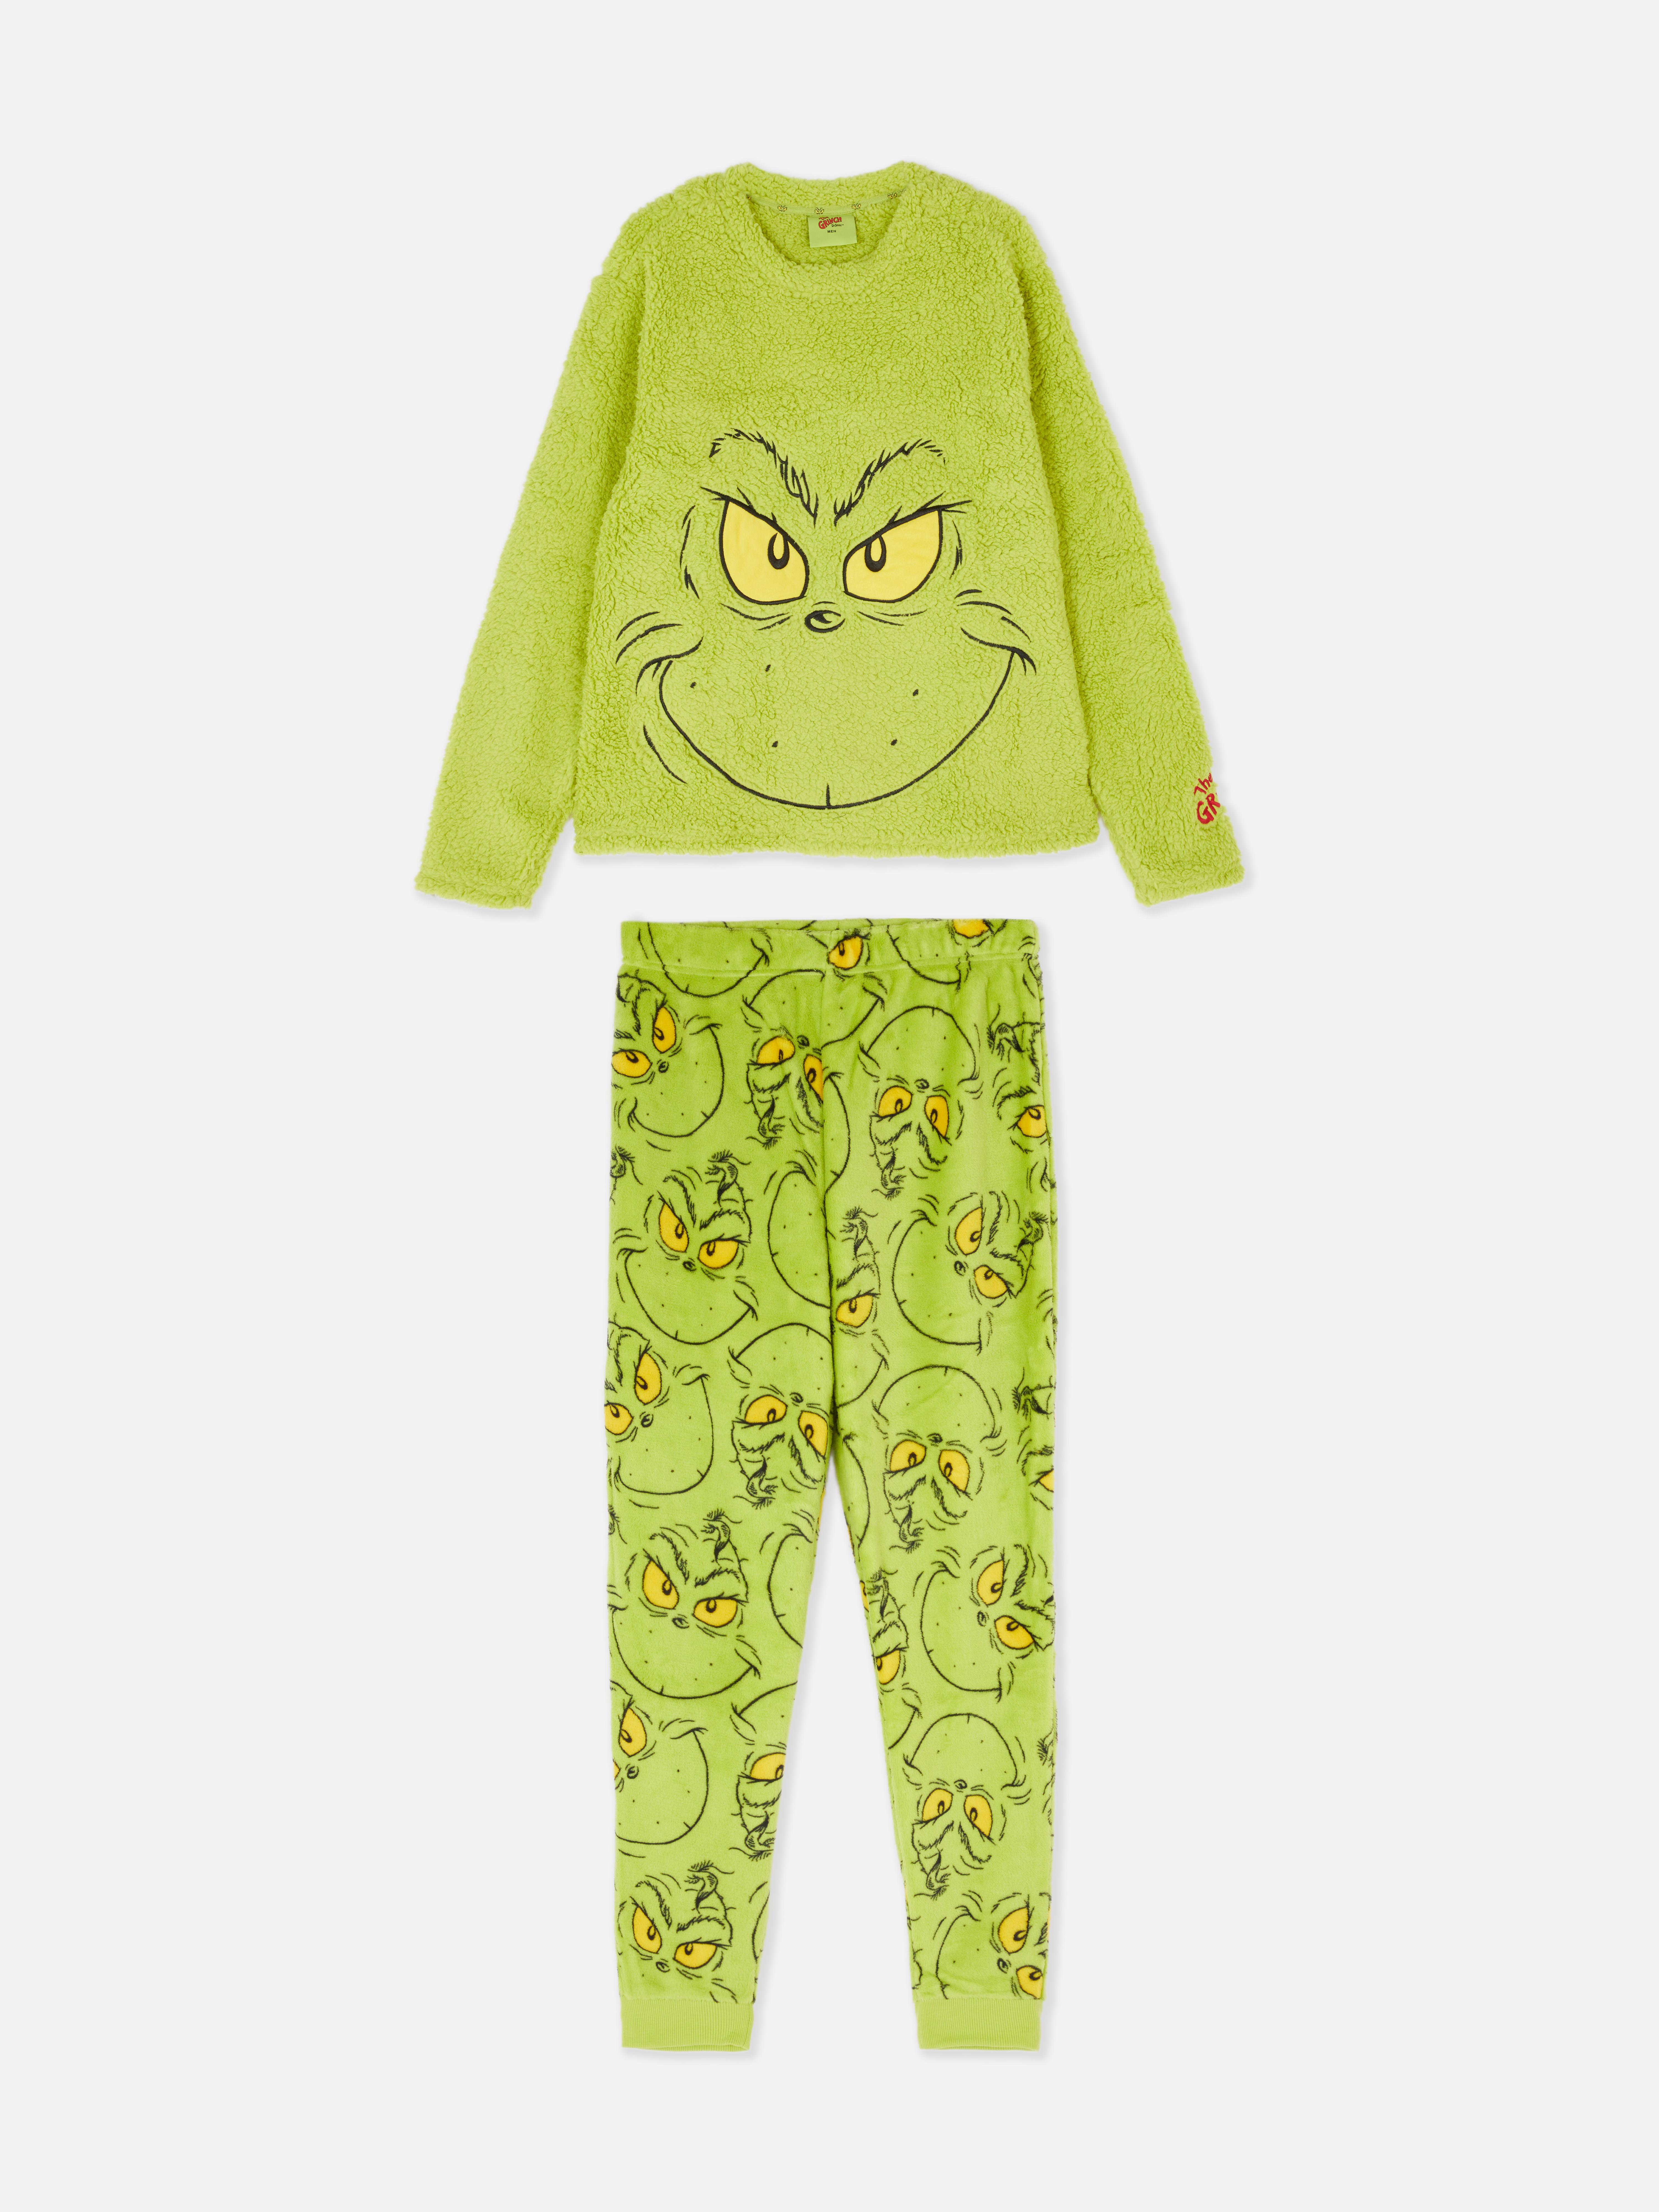 Men's The Grinch Christmas Family Pyjamas